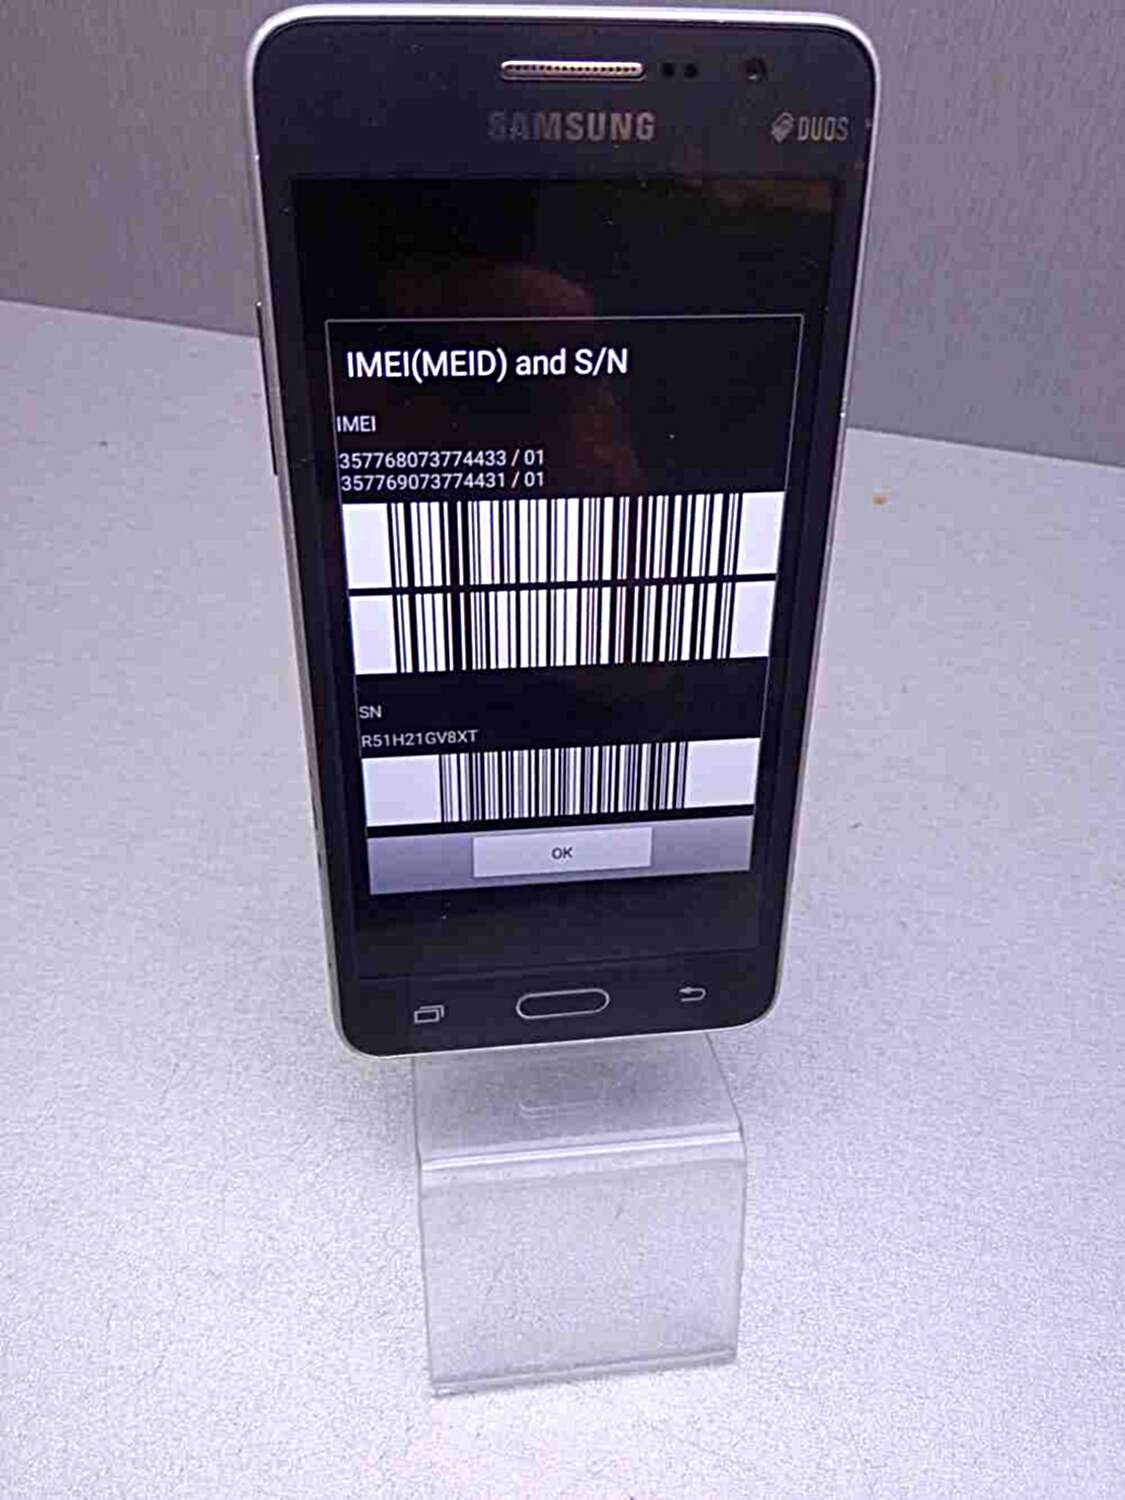 Samsung Galaxy Grand Prime VE (SM-G531H) 1/8Gb 8